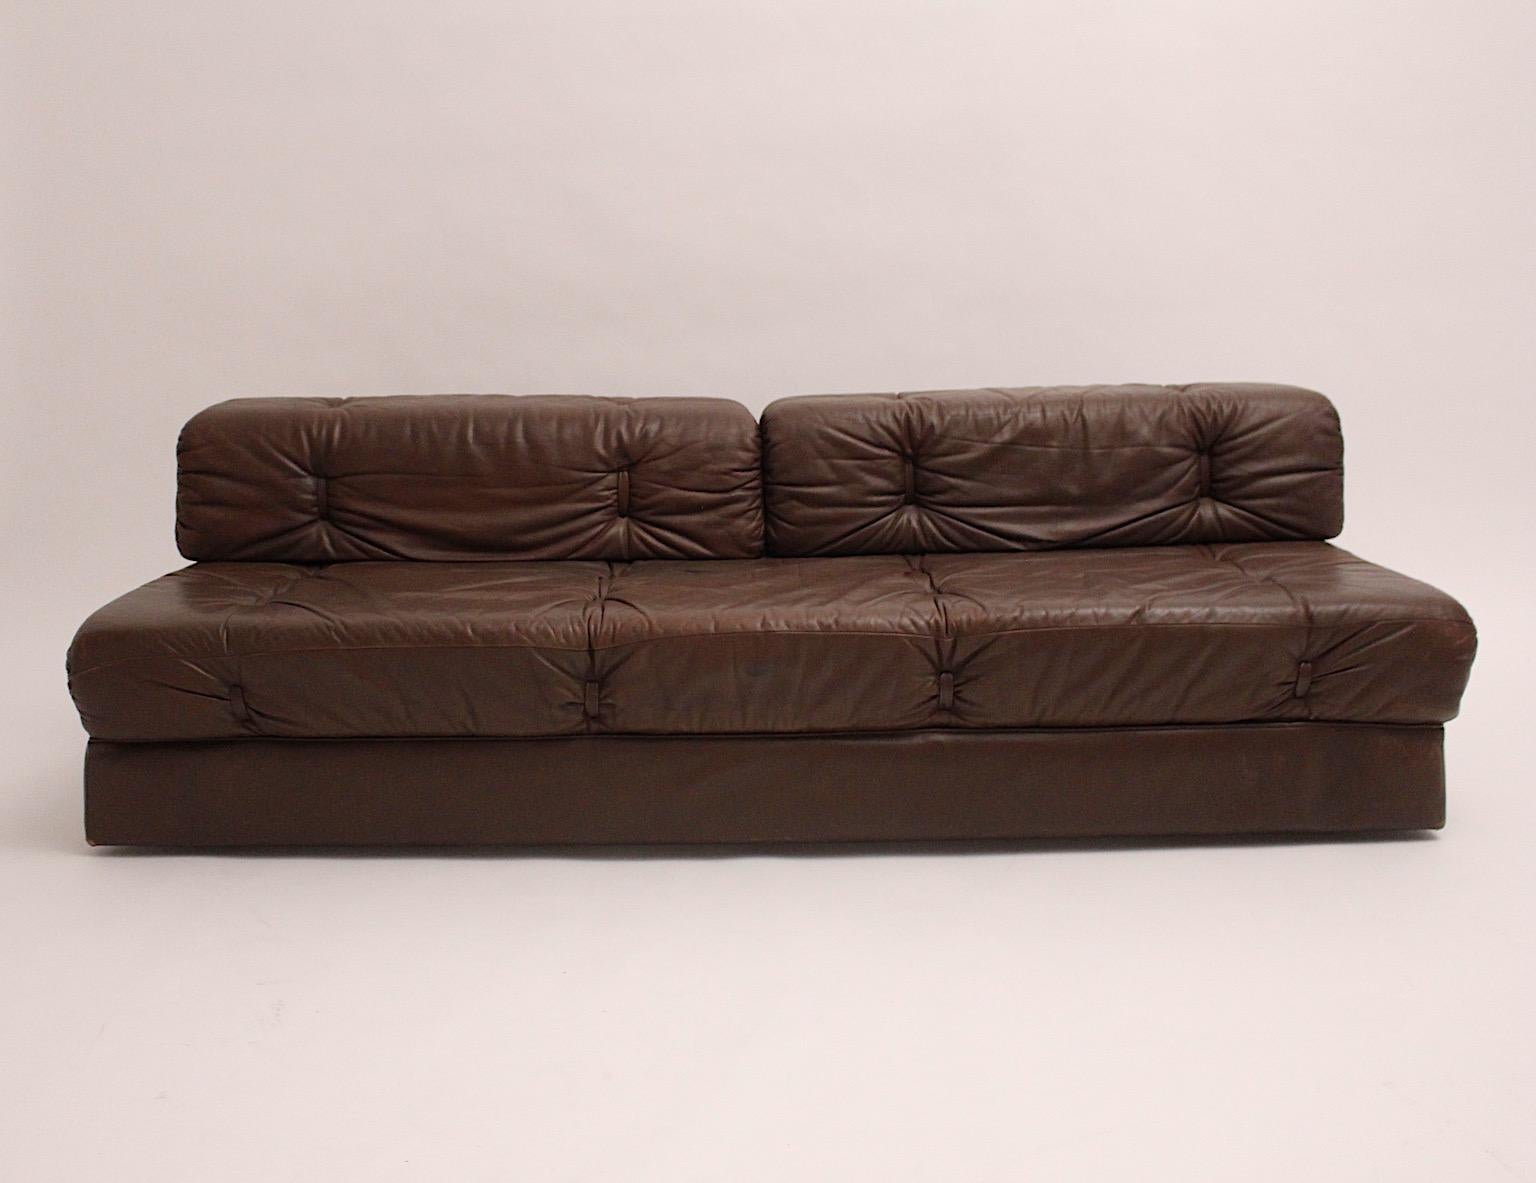 Cuir Wittmann Leather Brown Vintage Sofa or Daybed Atrium De Sede Style 1970s Austria en vente